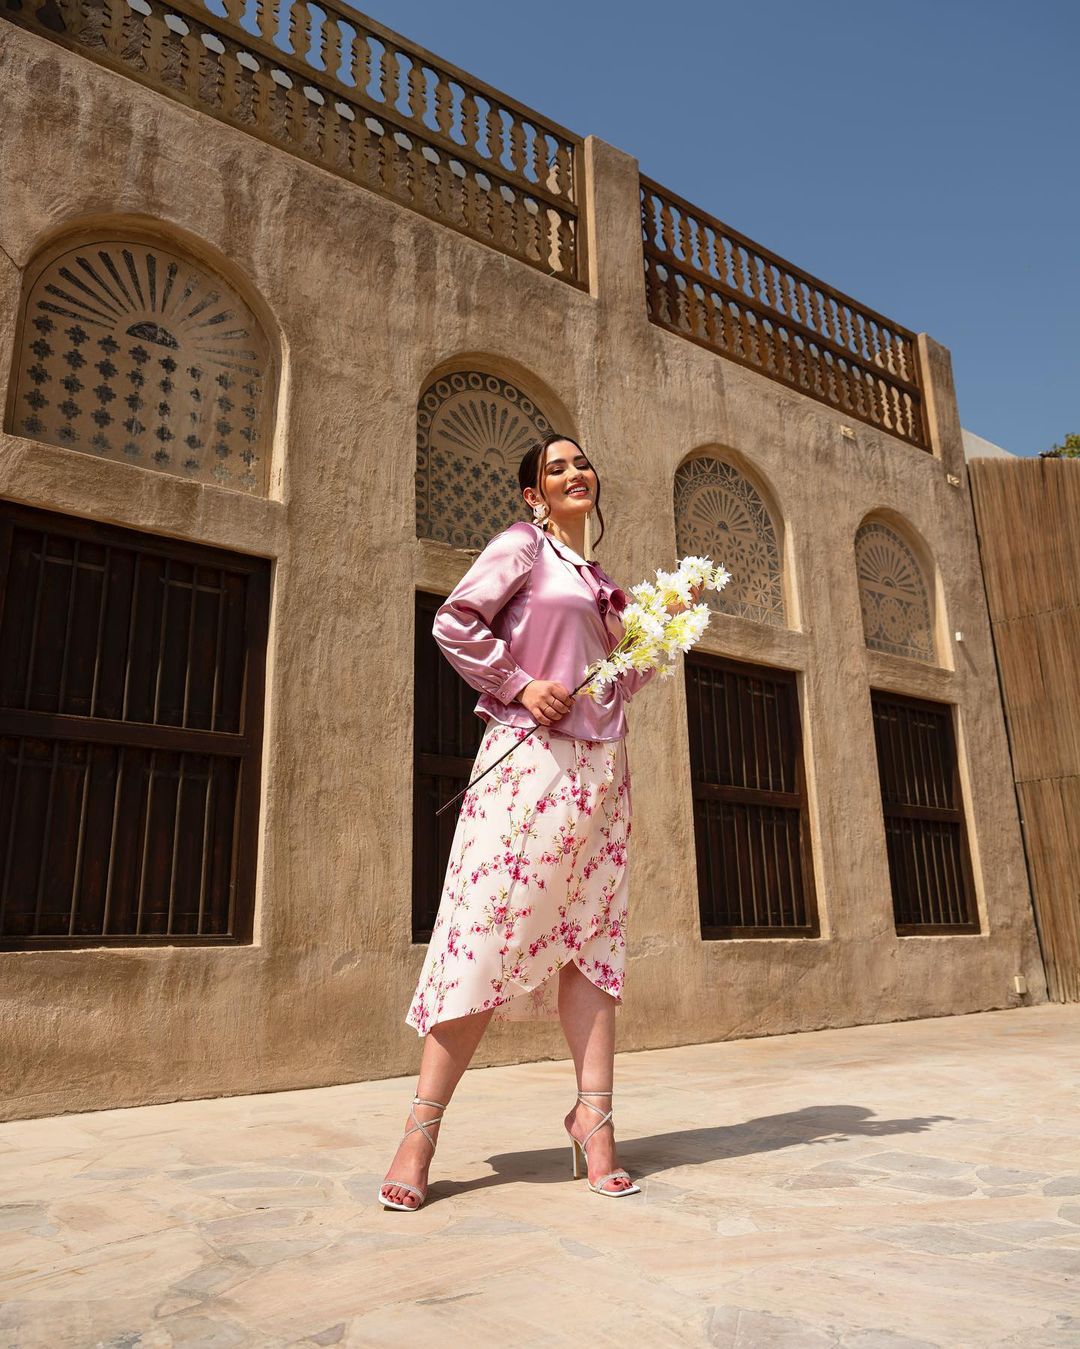 30 Most Popular Dubai Street Style Fashion Ideas for Women